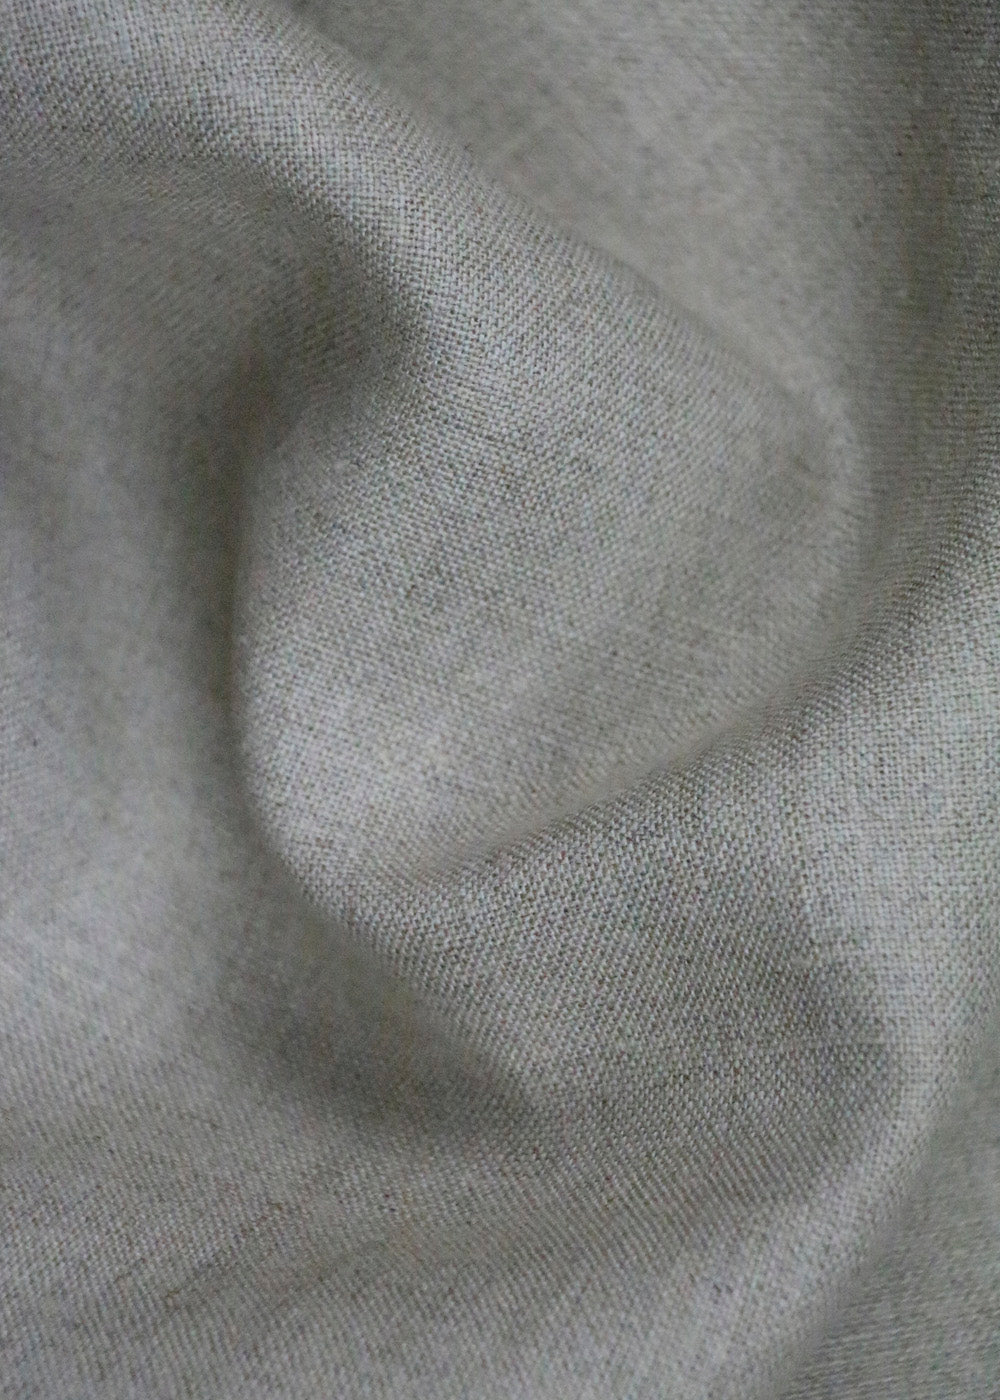 gently folded grey linen fabric